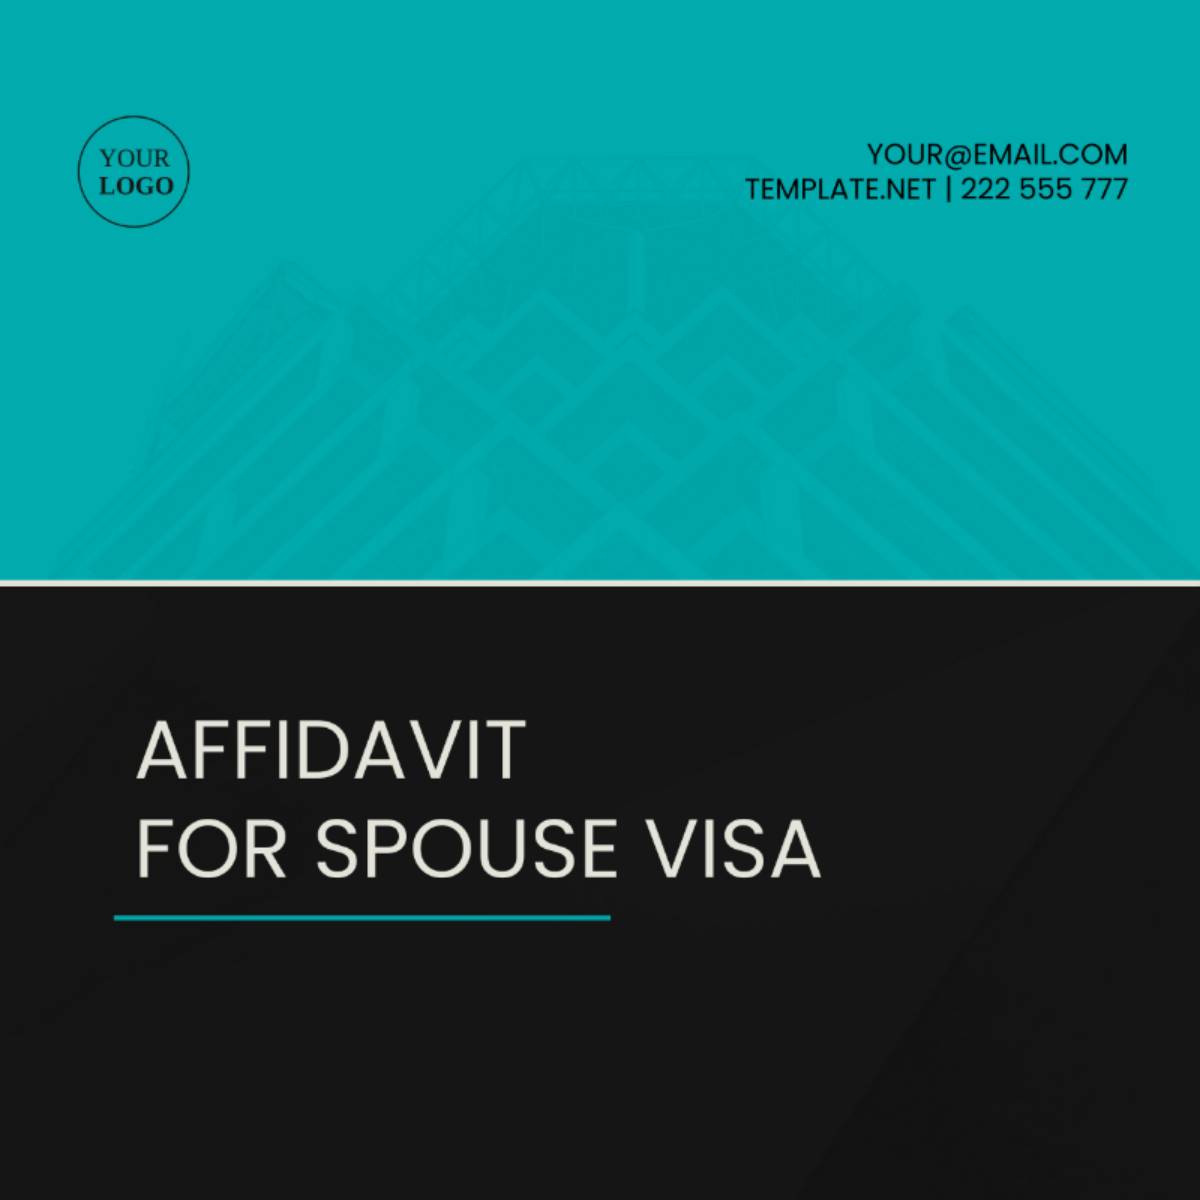 Affidavit For Spouse Visa Template